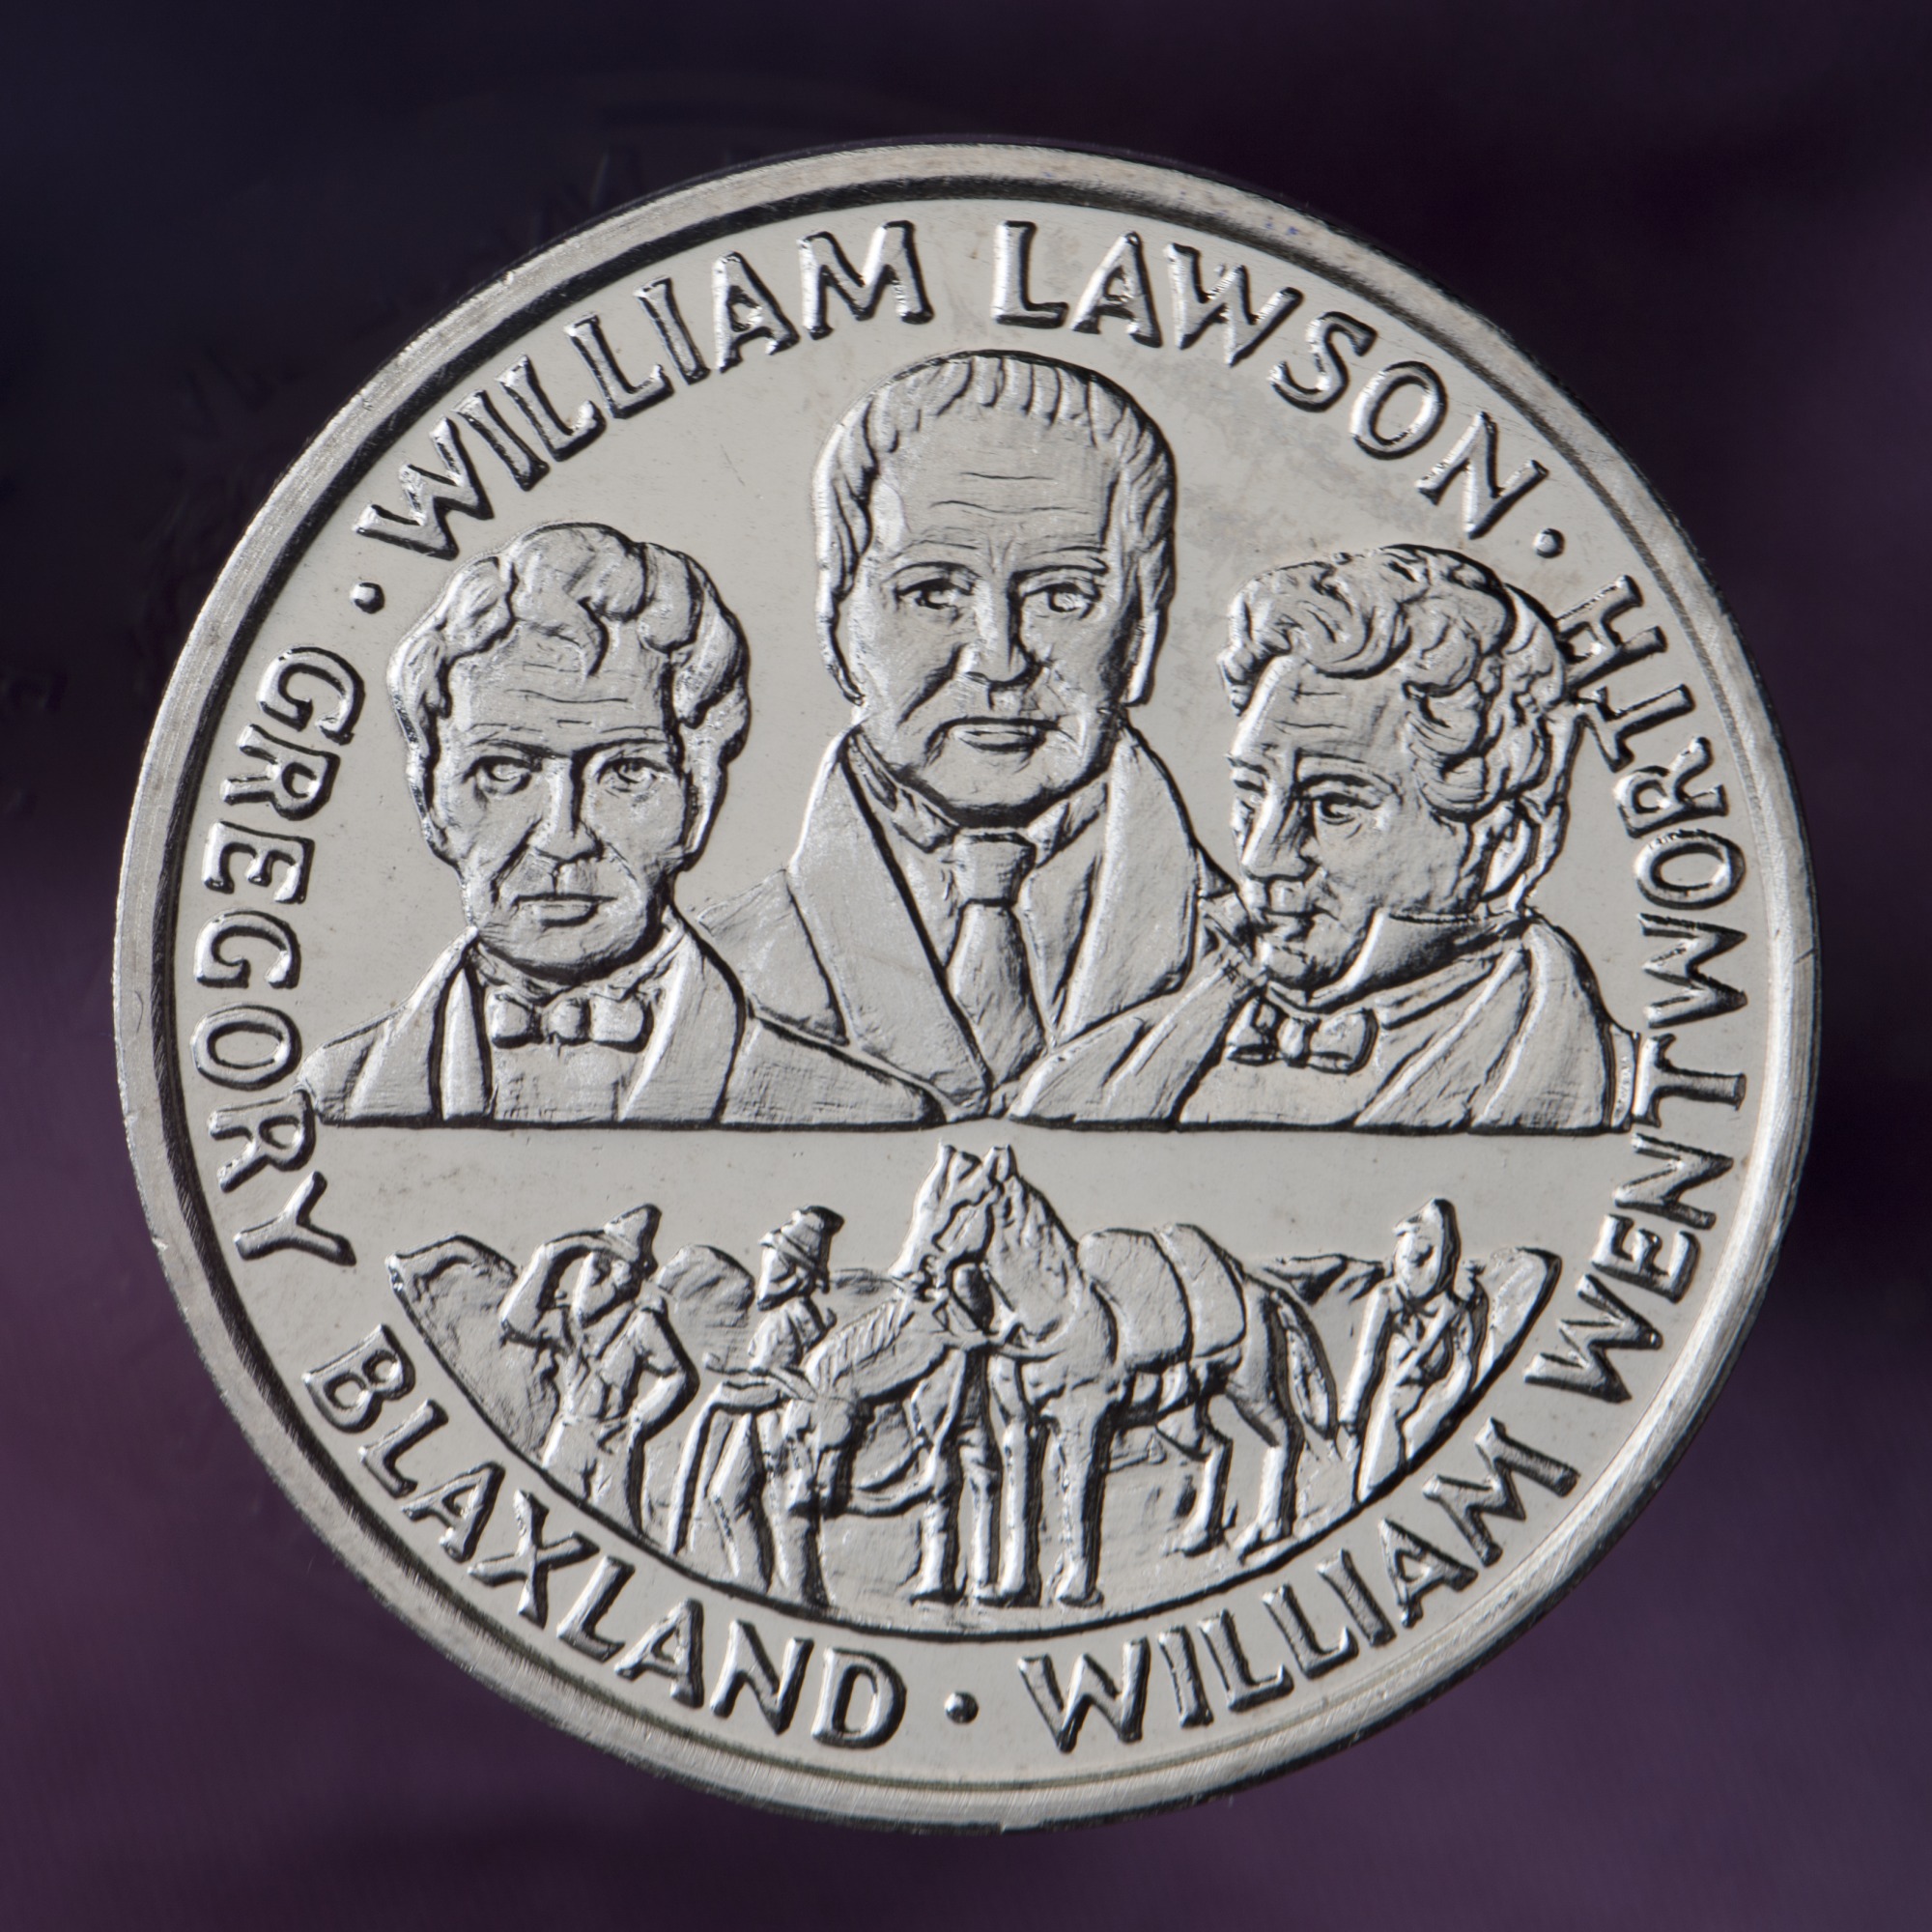 <p>Australian bicentennial commemorative medal depicting explorers Blaxland, Wentworth and Lawson</p>
